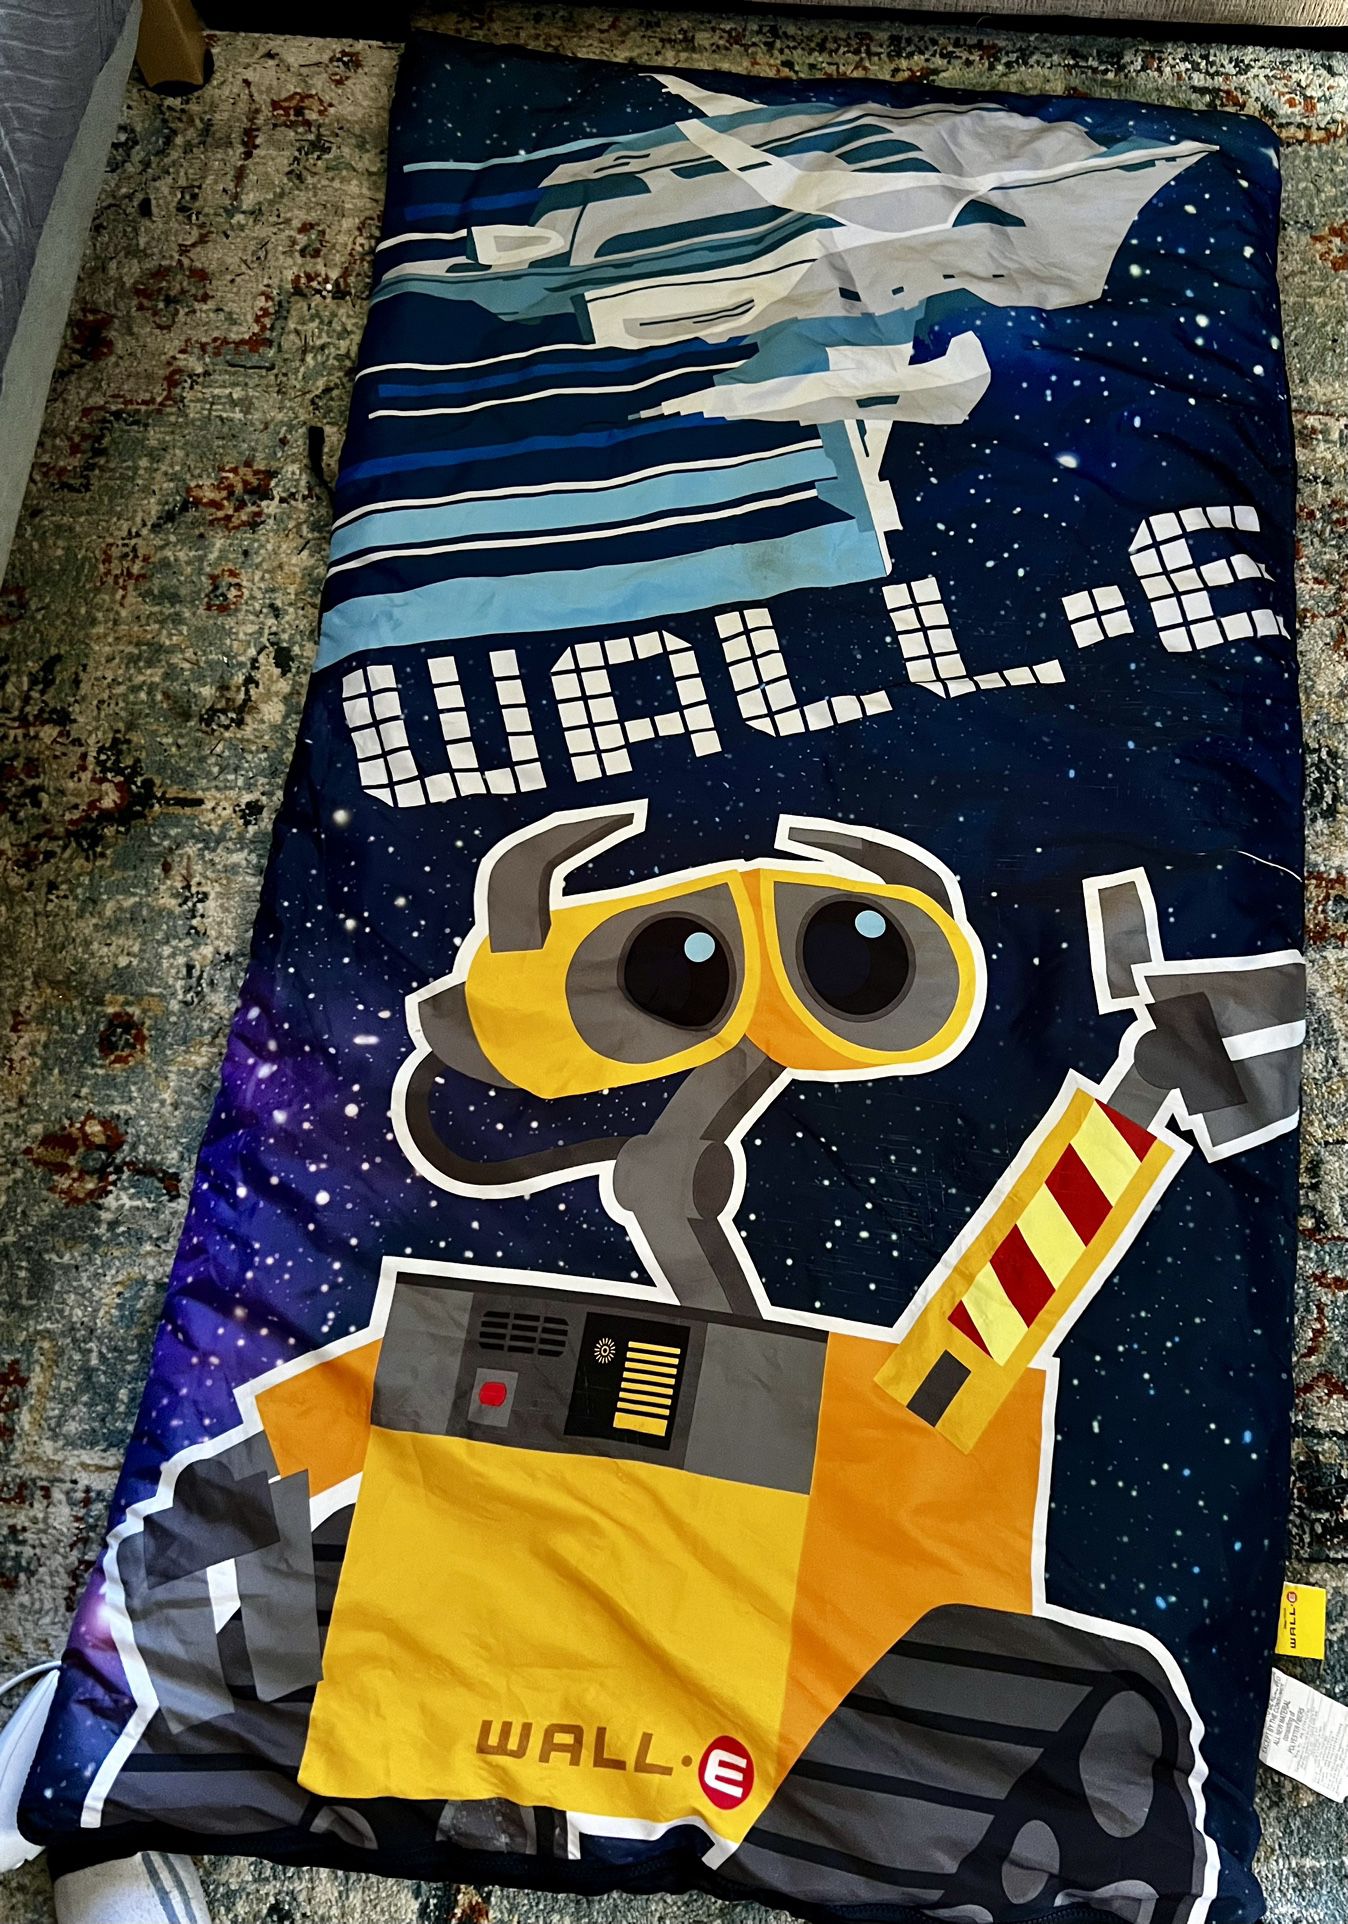 Wall-e Sleeping Bag